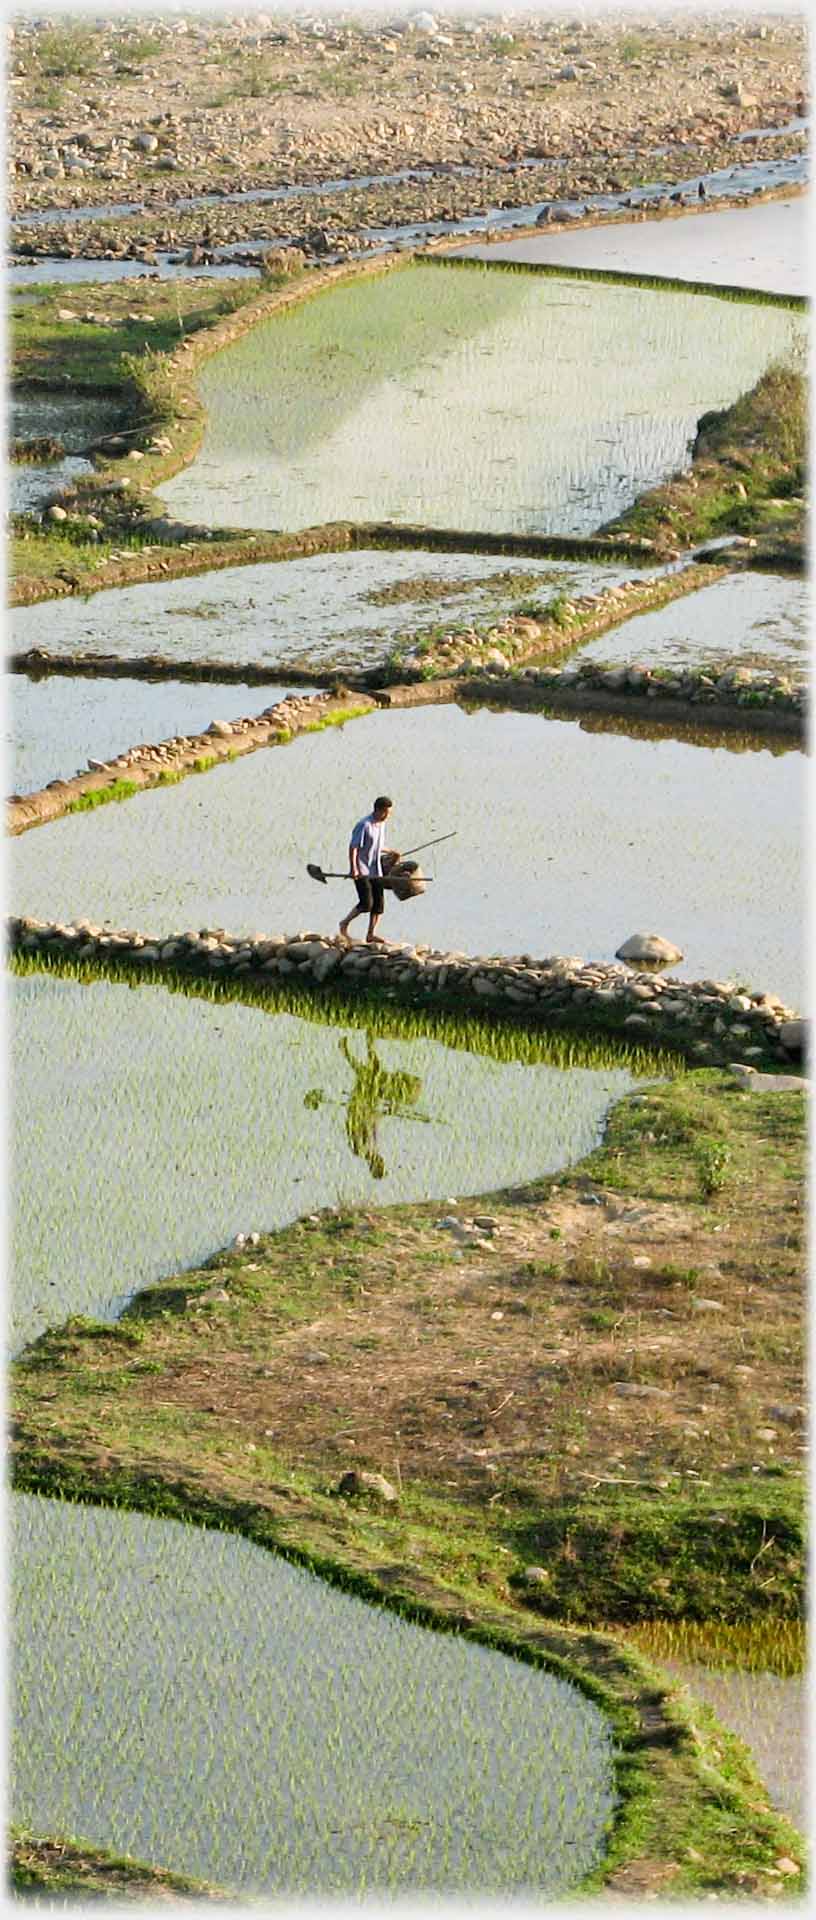 Man walking on dyke with reflection in water filled field